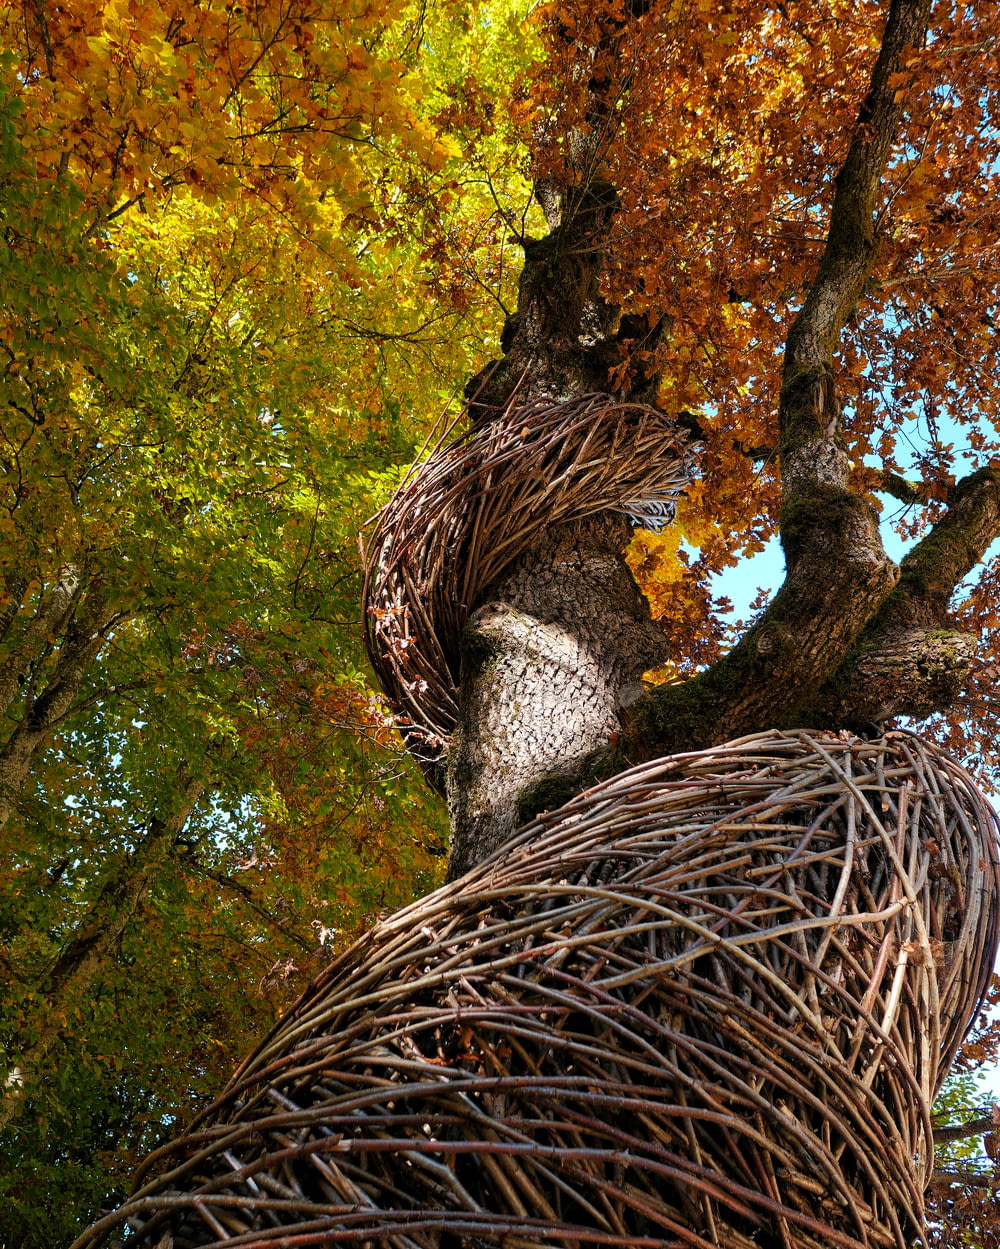 a sculpture of a bird nest on top of a tree